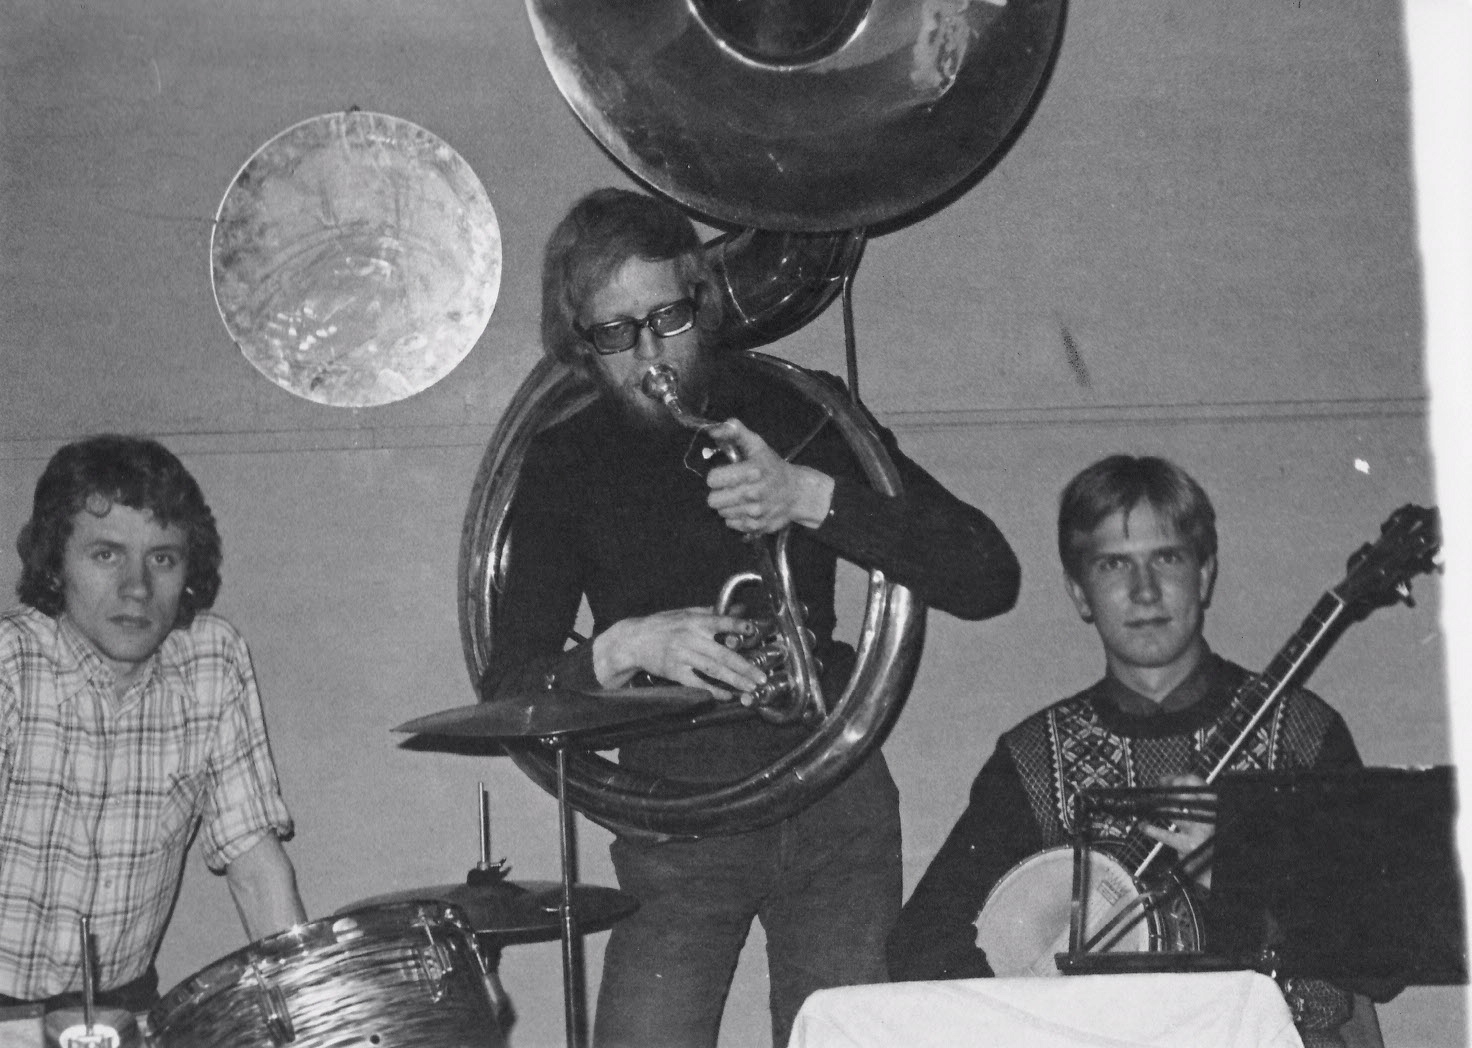 Scaniazz 1974. The rhythm section